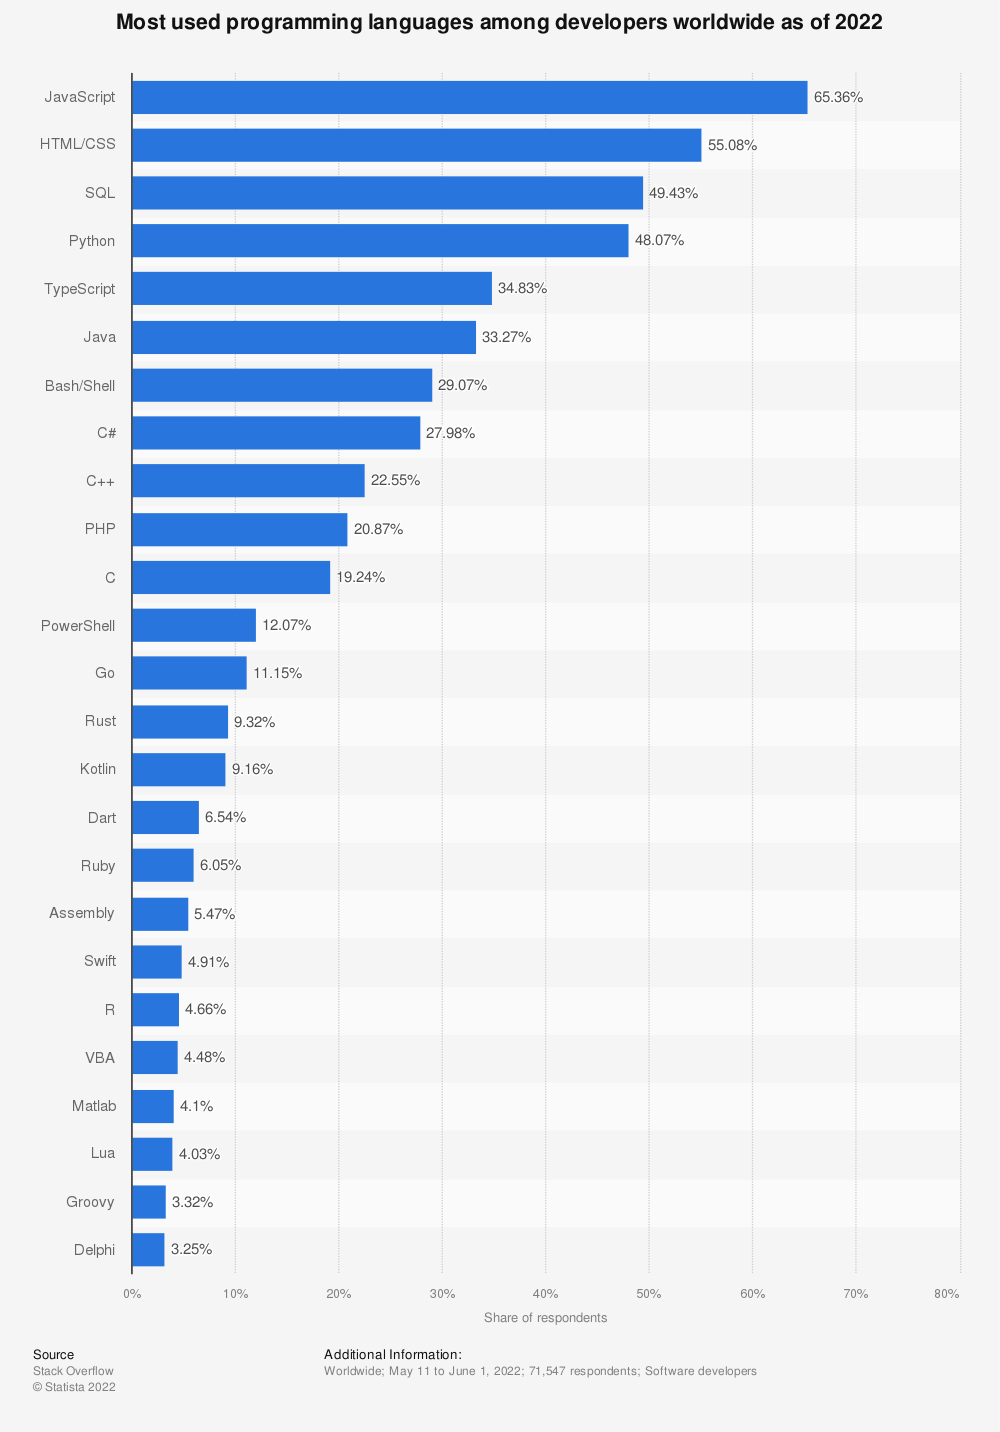 Software developers worldwide preferred JavaScript